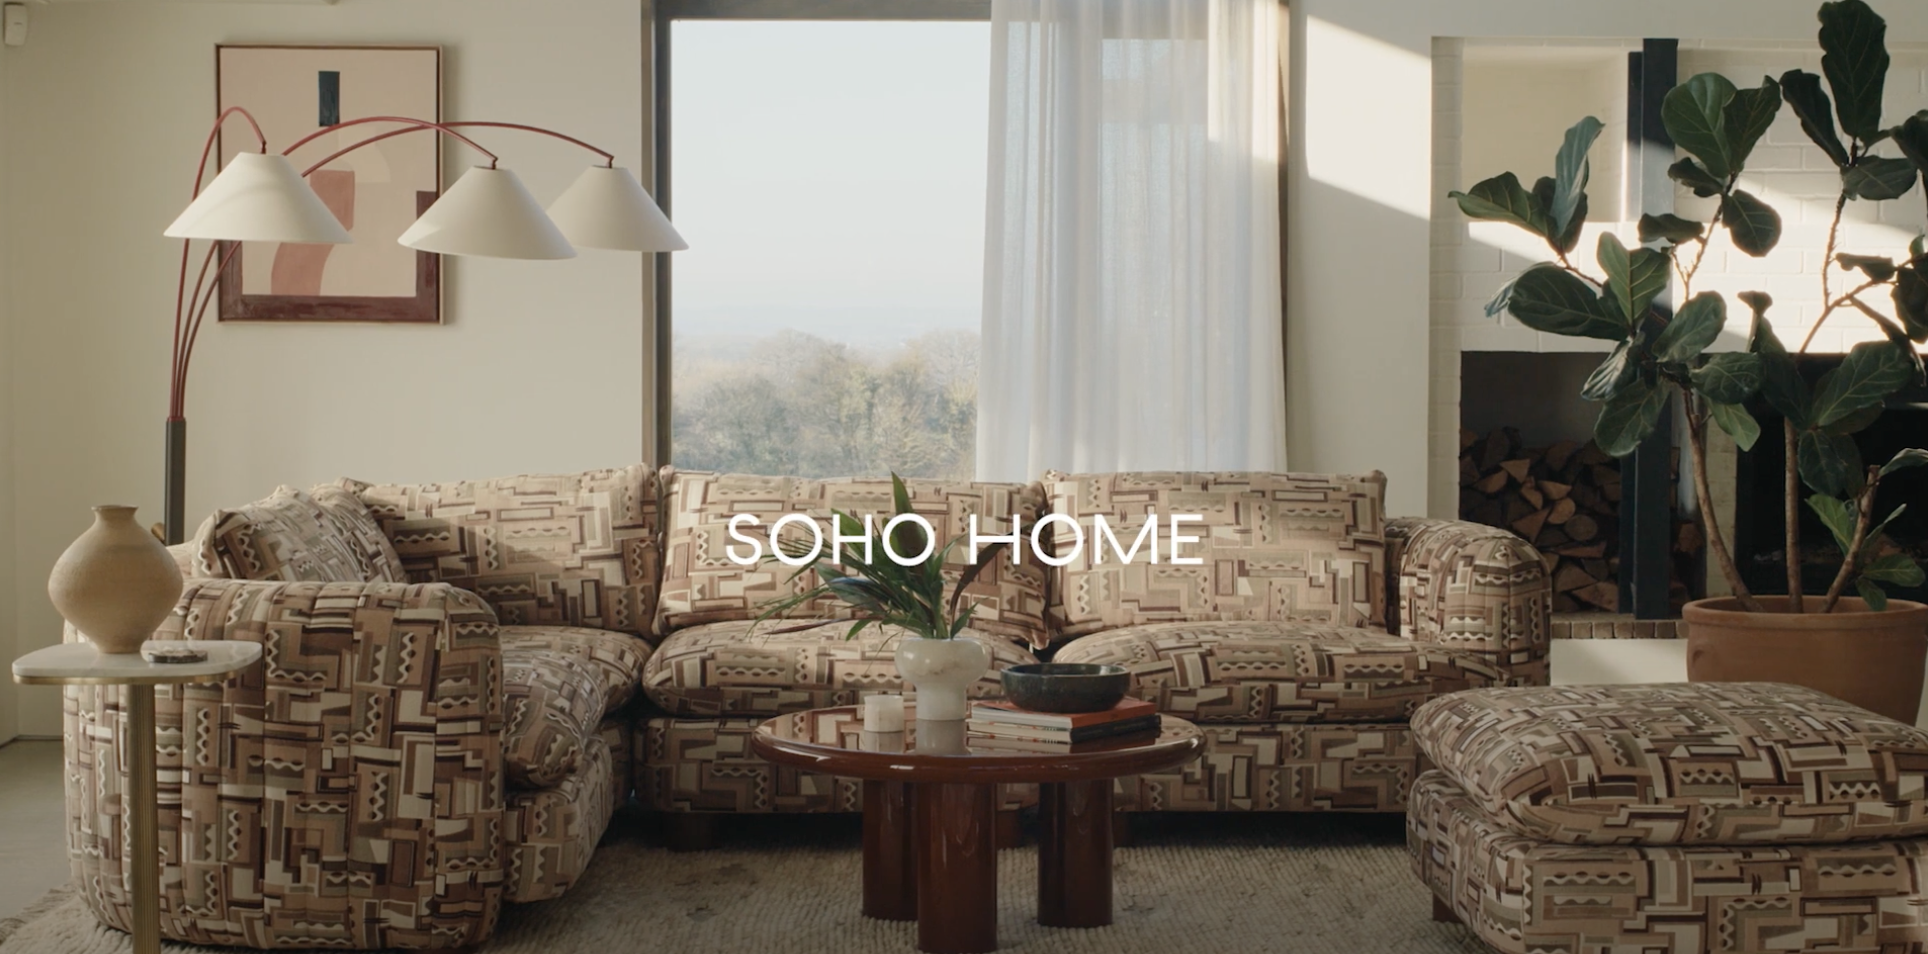 soho home furniture-shop